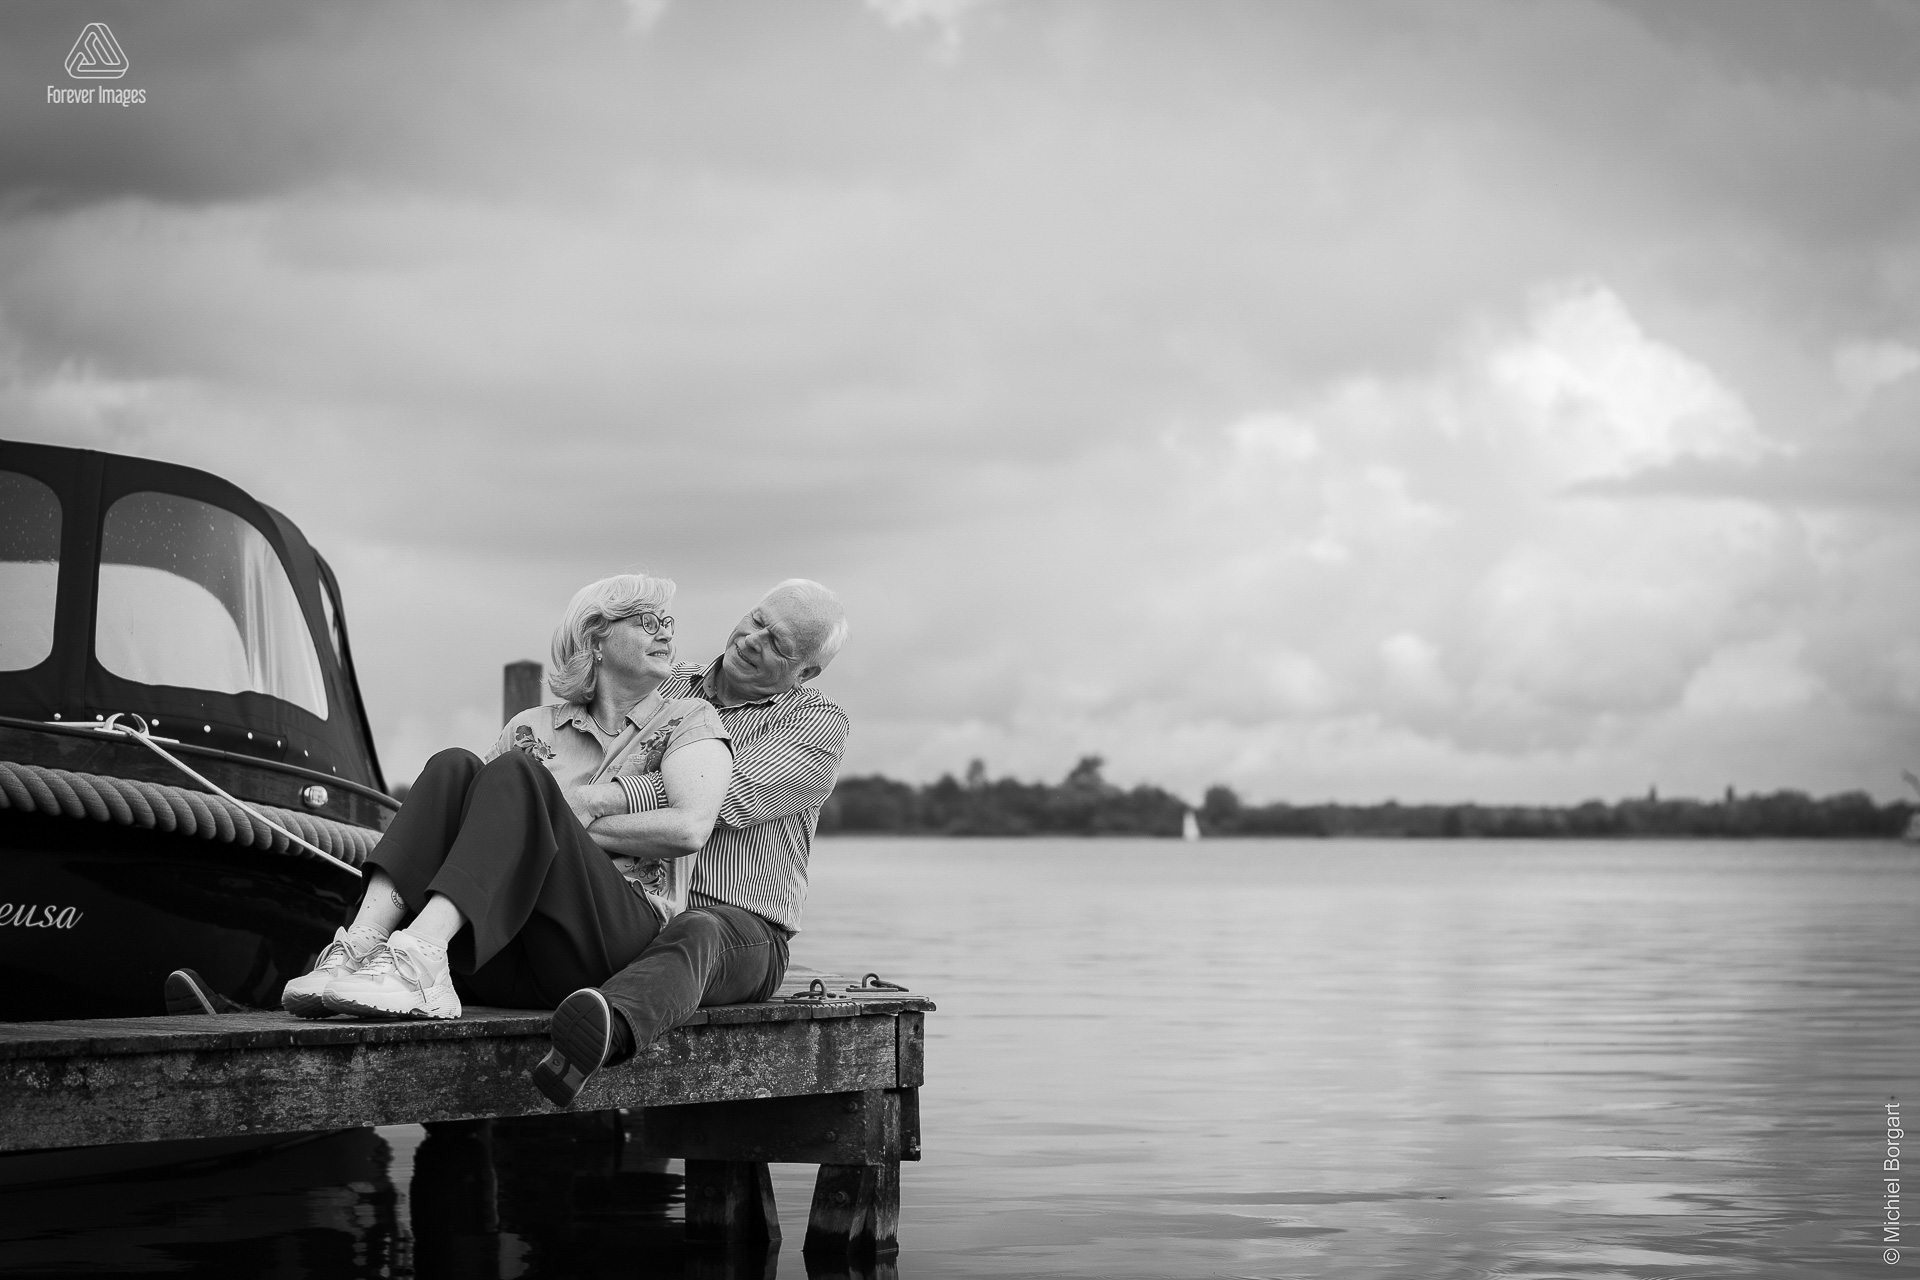 Portrait photo black and white B&W couple on pier next to boat | Ronald Marja Mensa HiQ Magazine | Portrait Photographer Michiel Borgart - Forever Images.